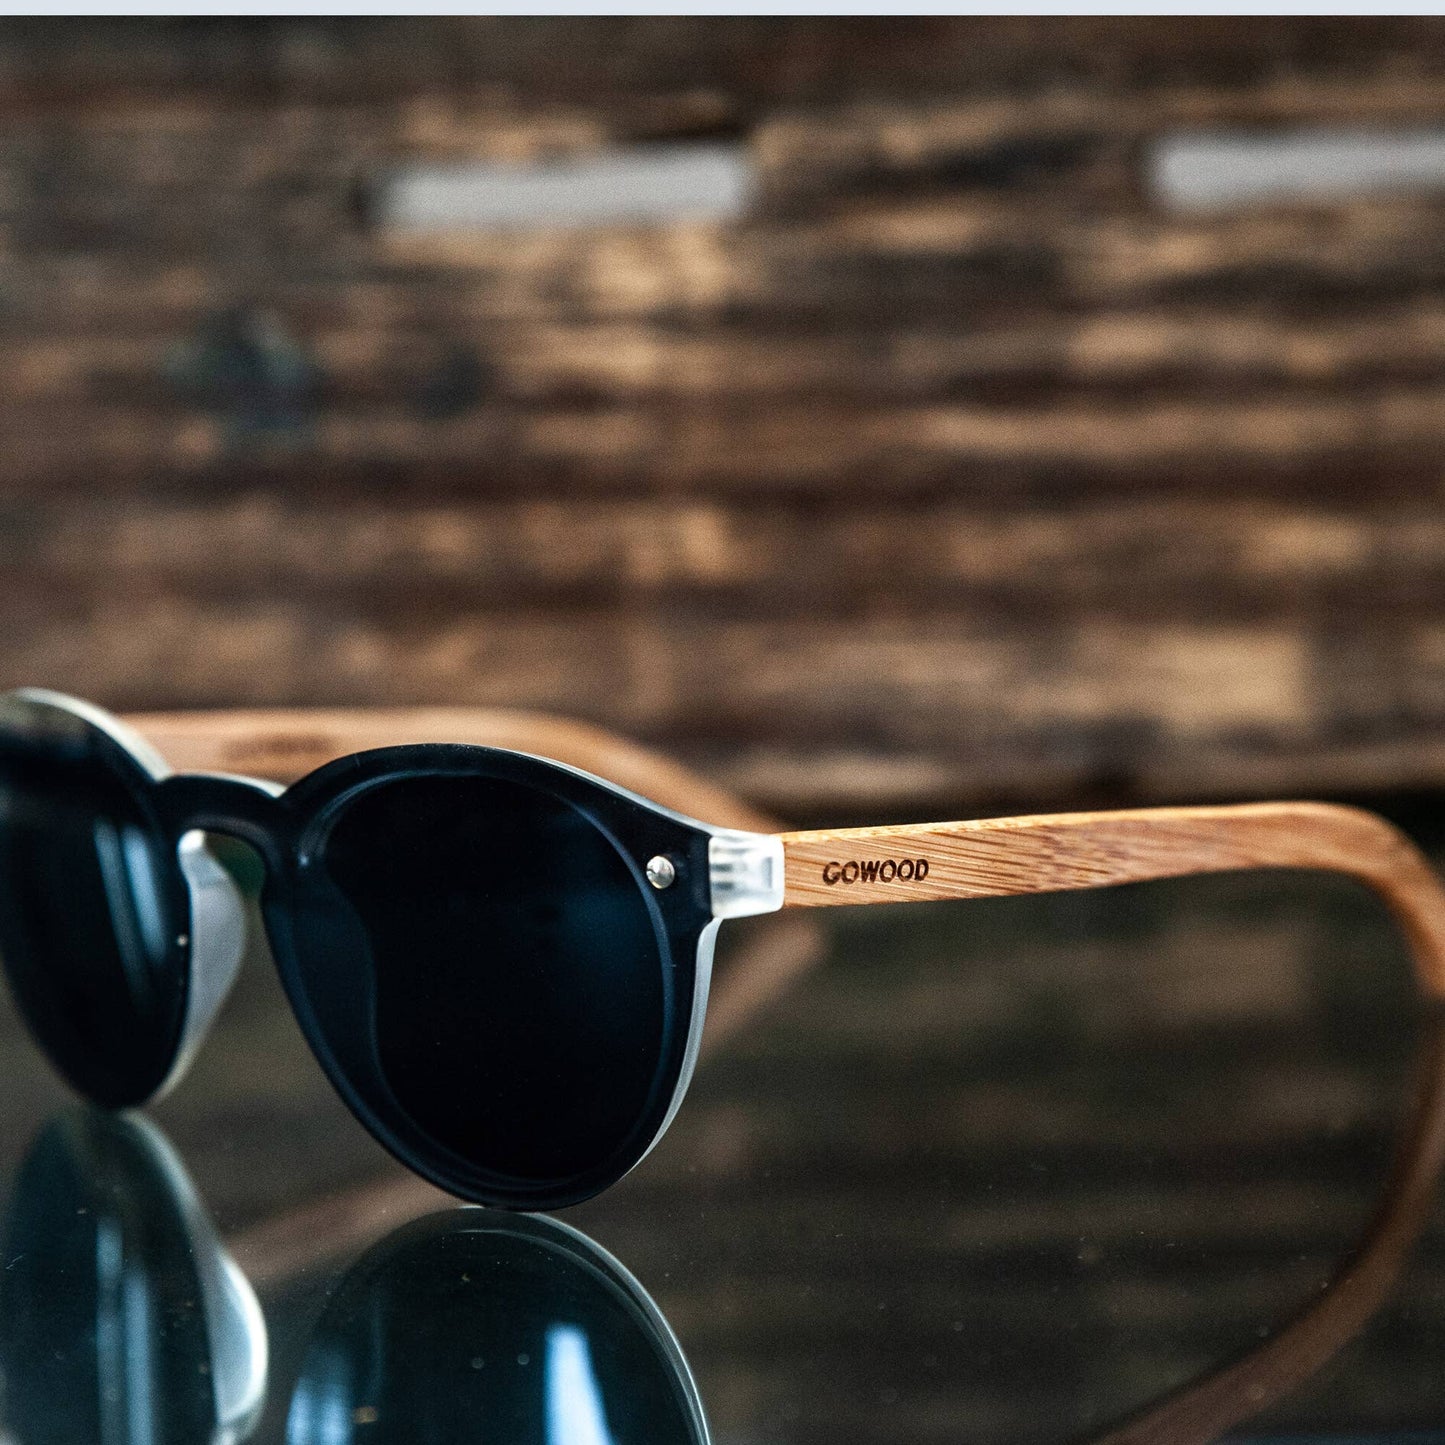 Rio Bamboo Wood Sunglasses